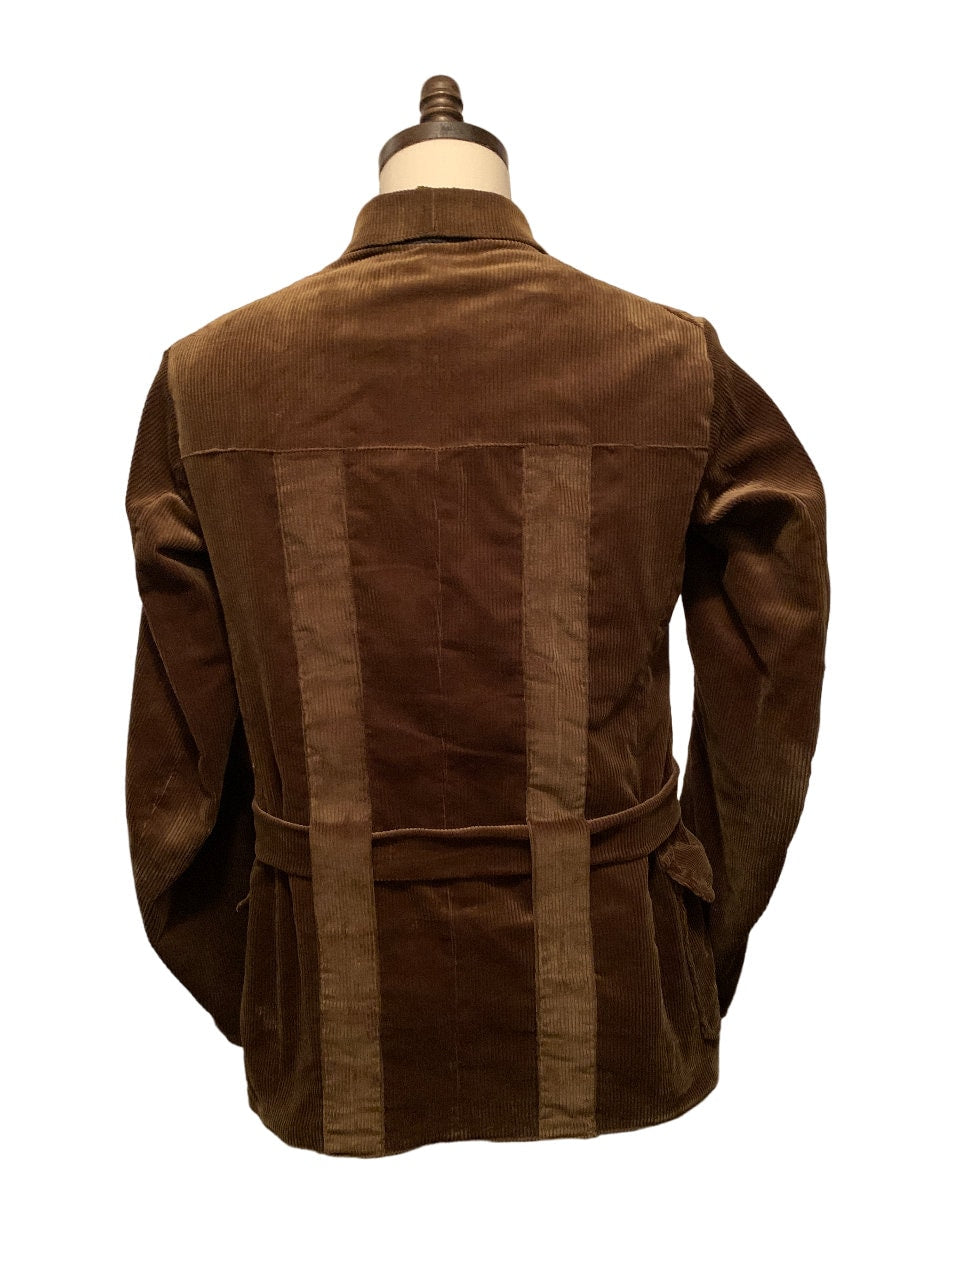 1910s 1920s Corduroy Work Norfolk Jacket